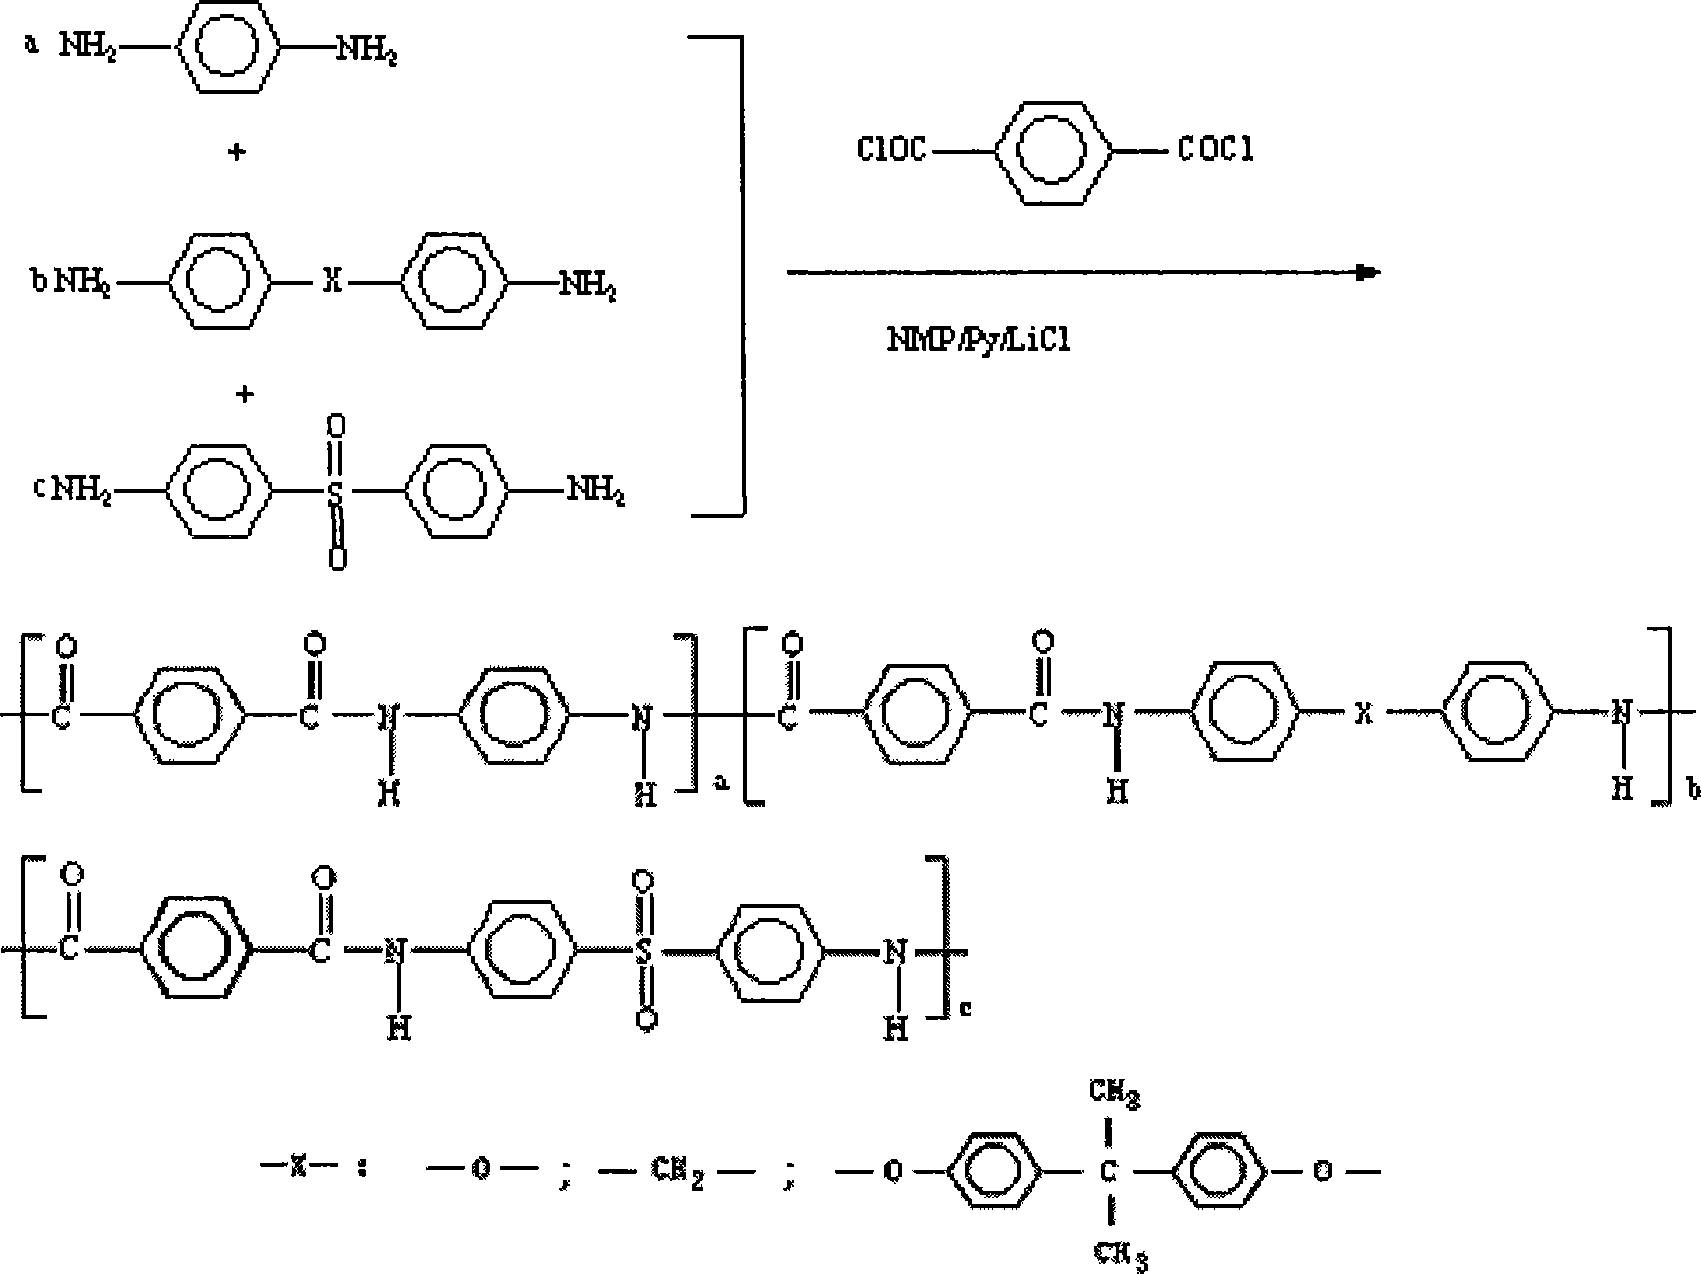 Random copolymerization polysulfonamide spinning liquid and preparation method thereof